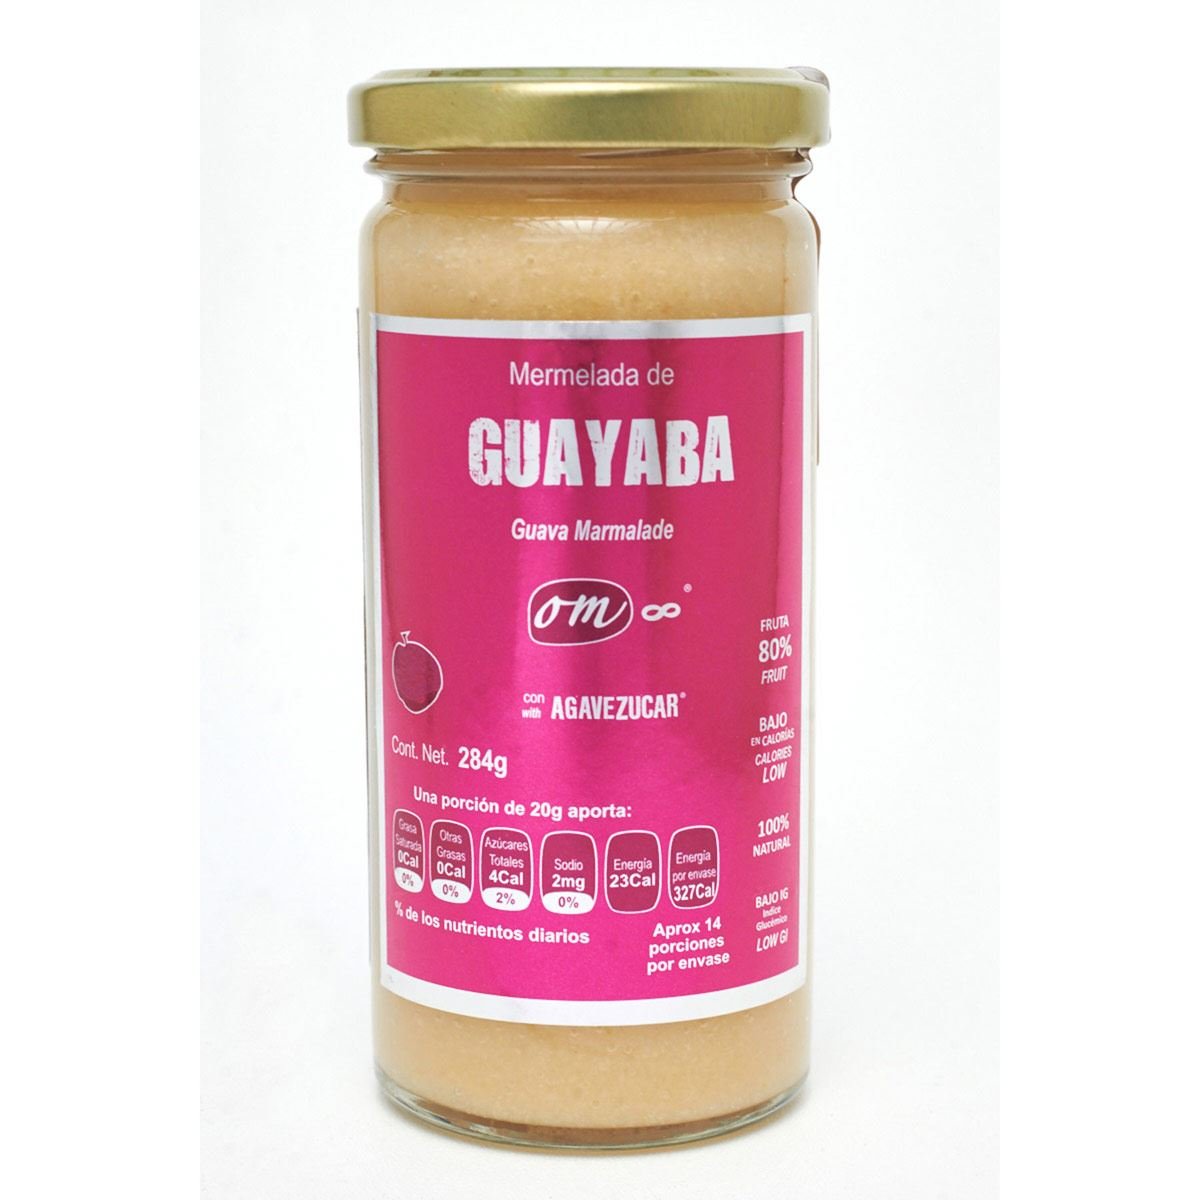 Mermelada de Guayaba OM8® con Agavezucar® 280g